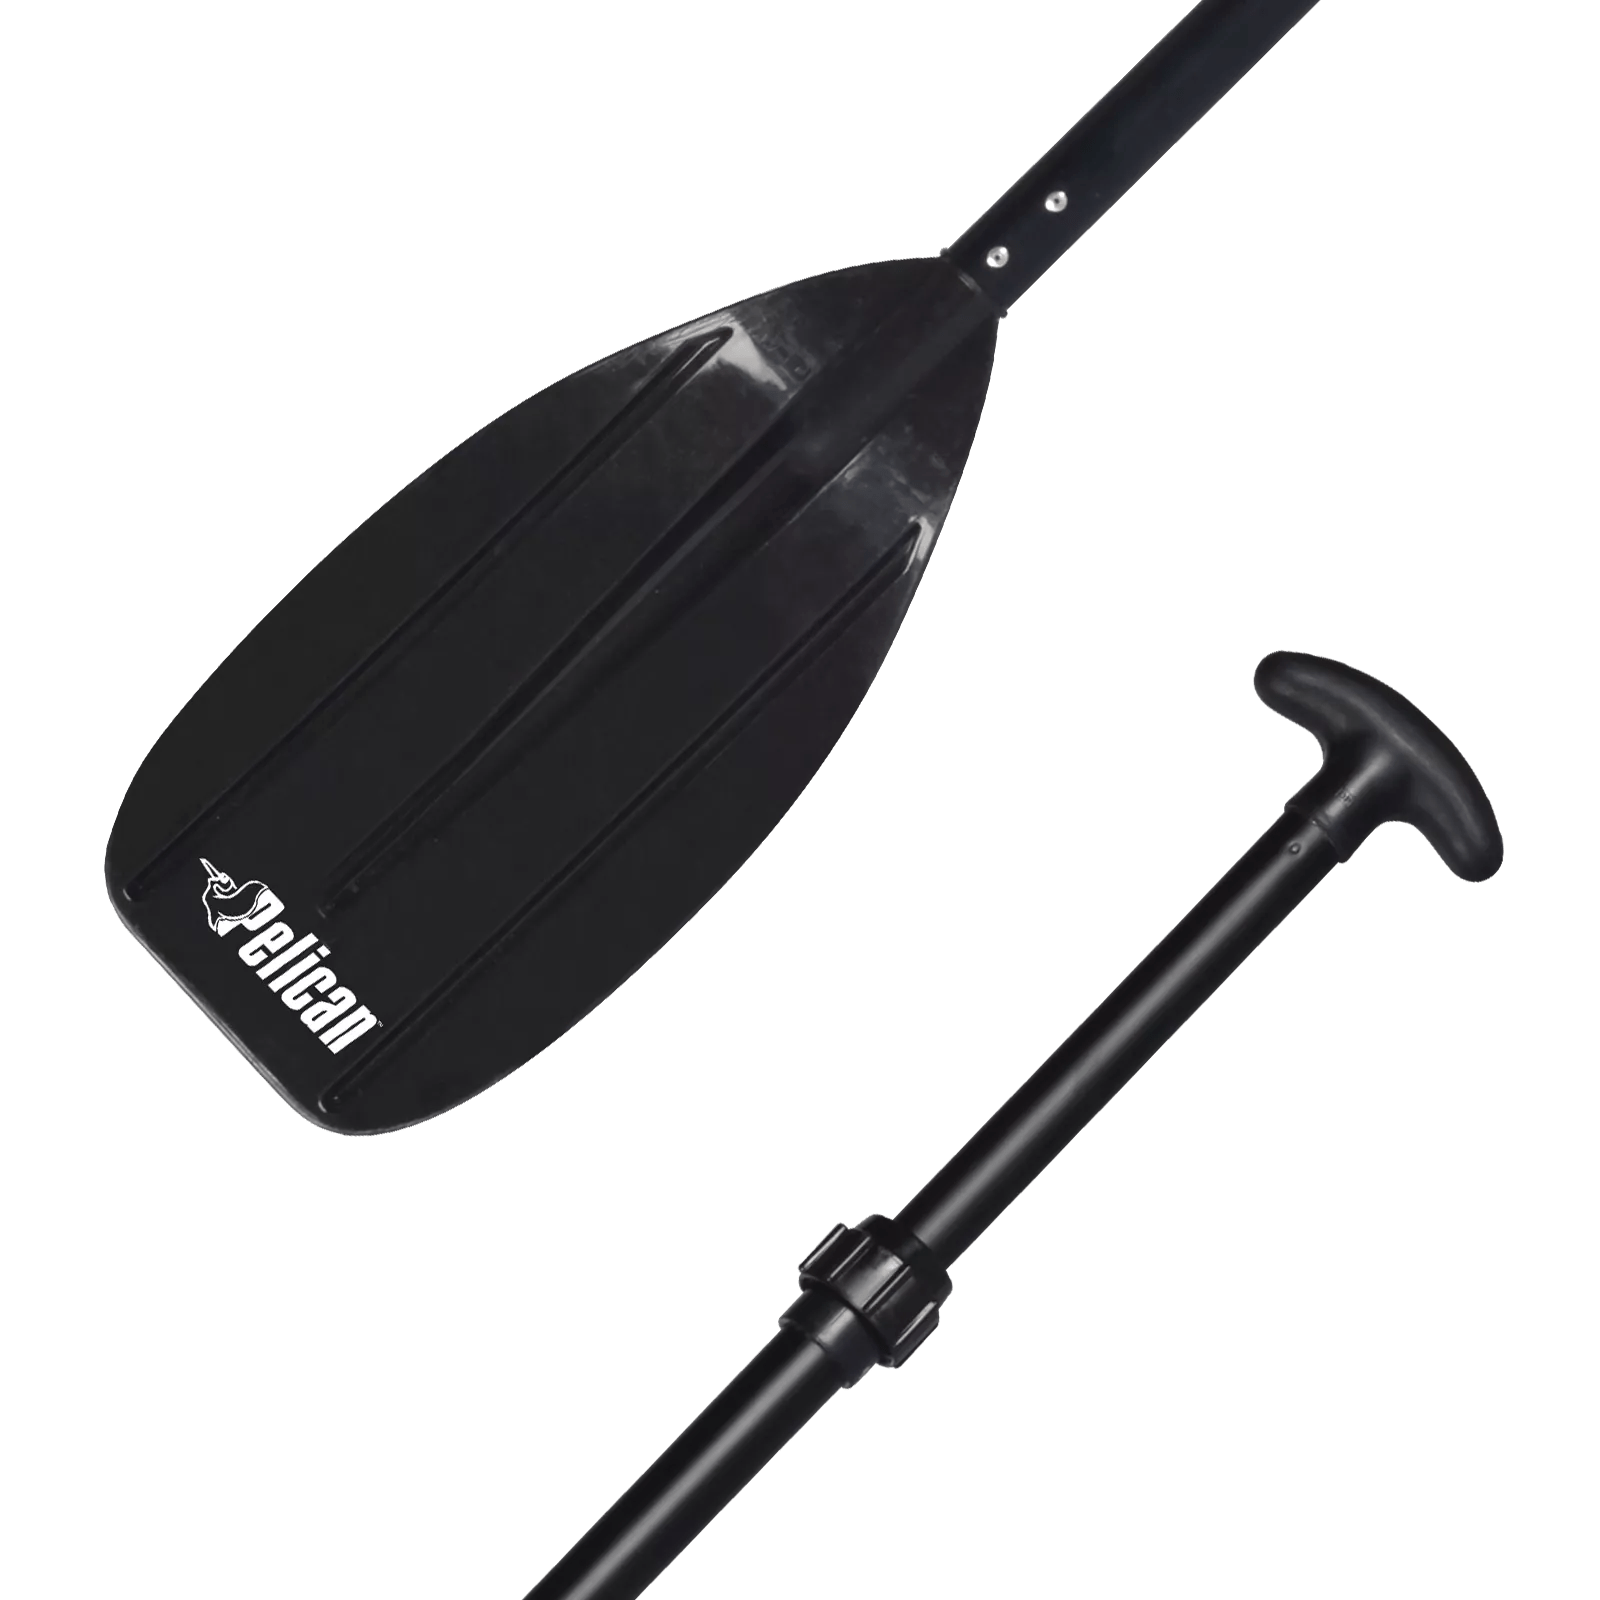 PELICAN - Adjustable Junior SUP Paddle 140-180 cm (55-70") - Black - PS1114-1 - ISO 